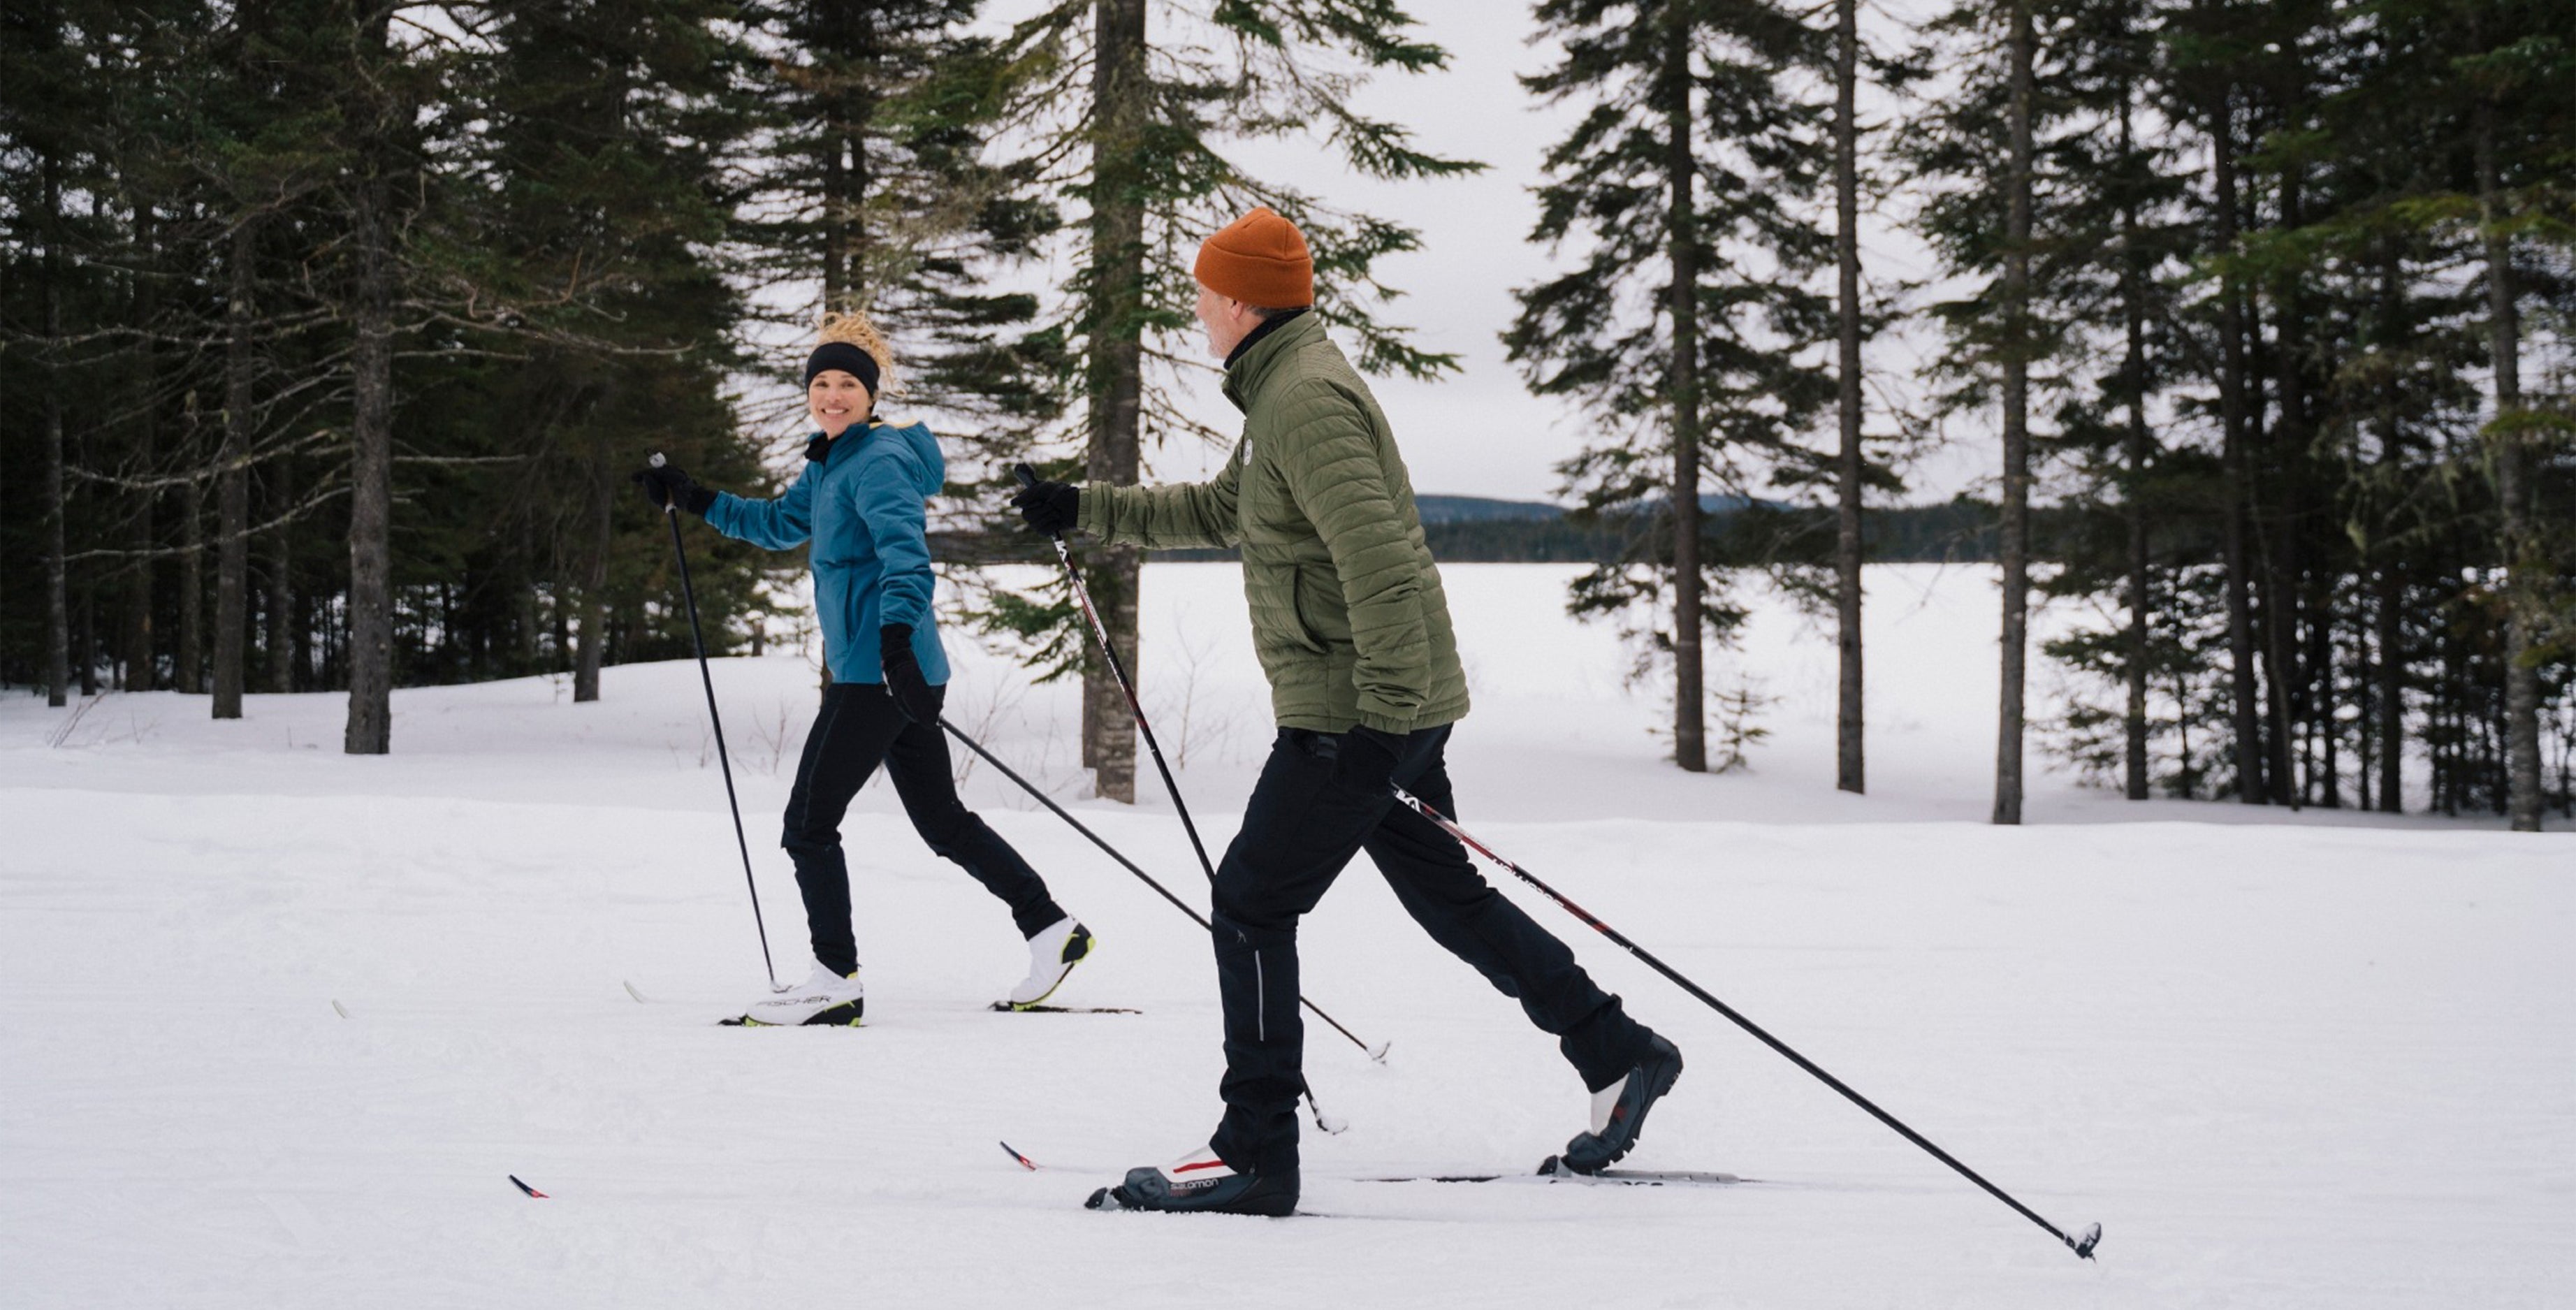 camp-mercier-best-cross-country-skiing-conditions